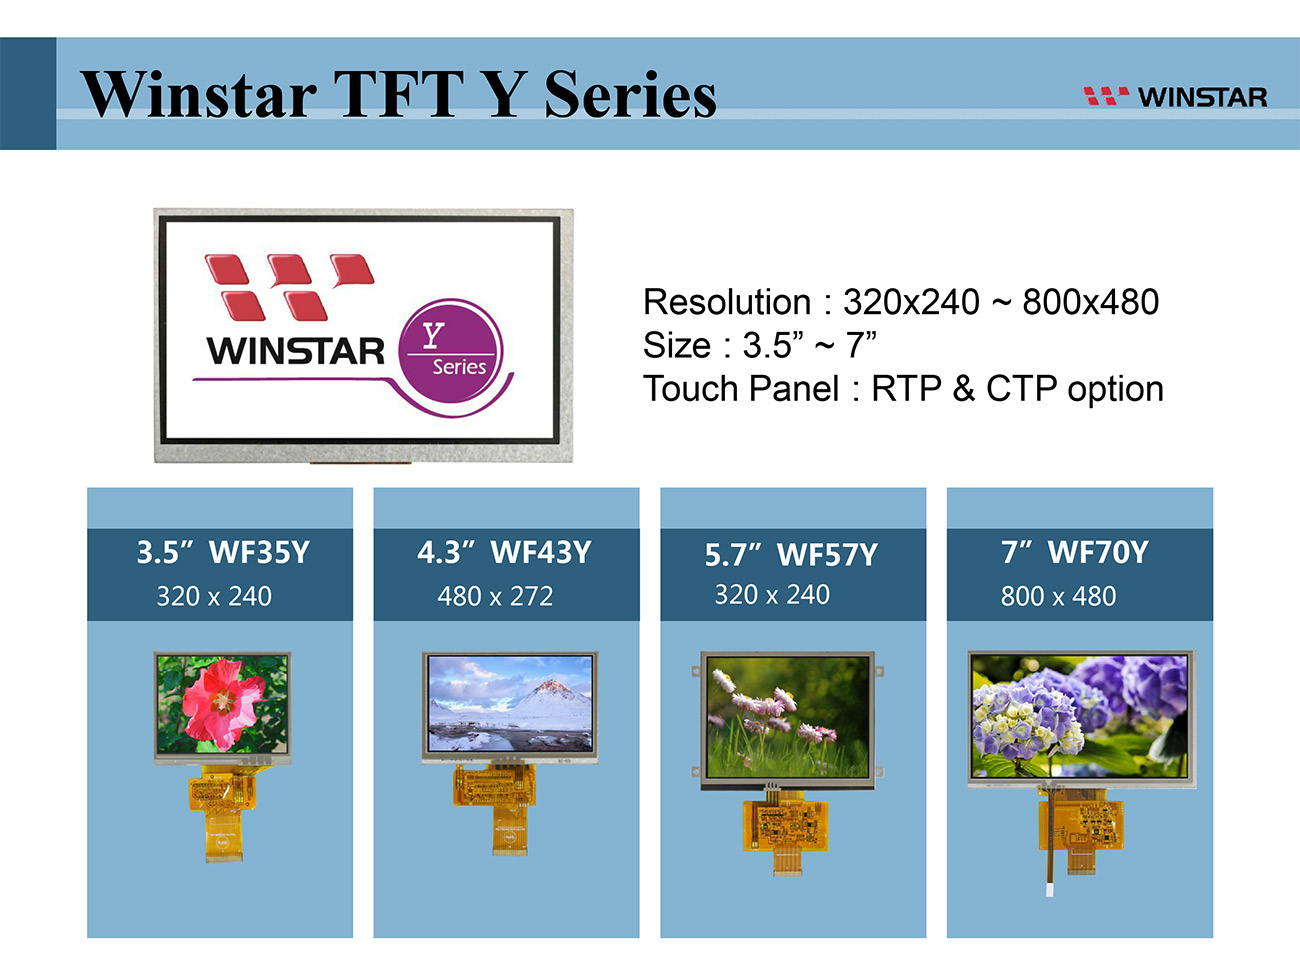 Winstar TFT LCD Y Series - 3.5 tft lcd, 3.5" tft lcd, tft lcd 3.5, tft lcd 3.5", 3.5 tft display, tft display 3.5, 4.3 tft lcd, 4.3 tft lcd, 4.3" tft lcd, tft lcd 4.3, tft lcd 4.3", 4.3 tft display, tft display 4.3, 5.7 tft lcd, 5.7" tft lcd, tft lcd 5.7, tft lcd 5.7", 5.7 tft display, tft display 5.7, 7 tft lcd, 7" tft lcd, tft lcd 7, tft lcd 7", 7 tft display, tft display 7, 7.0 tft lcd, 7.0 tft display